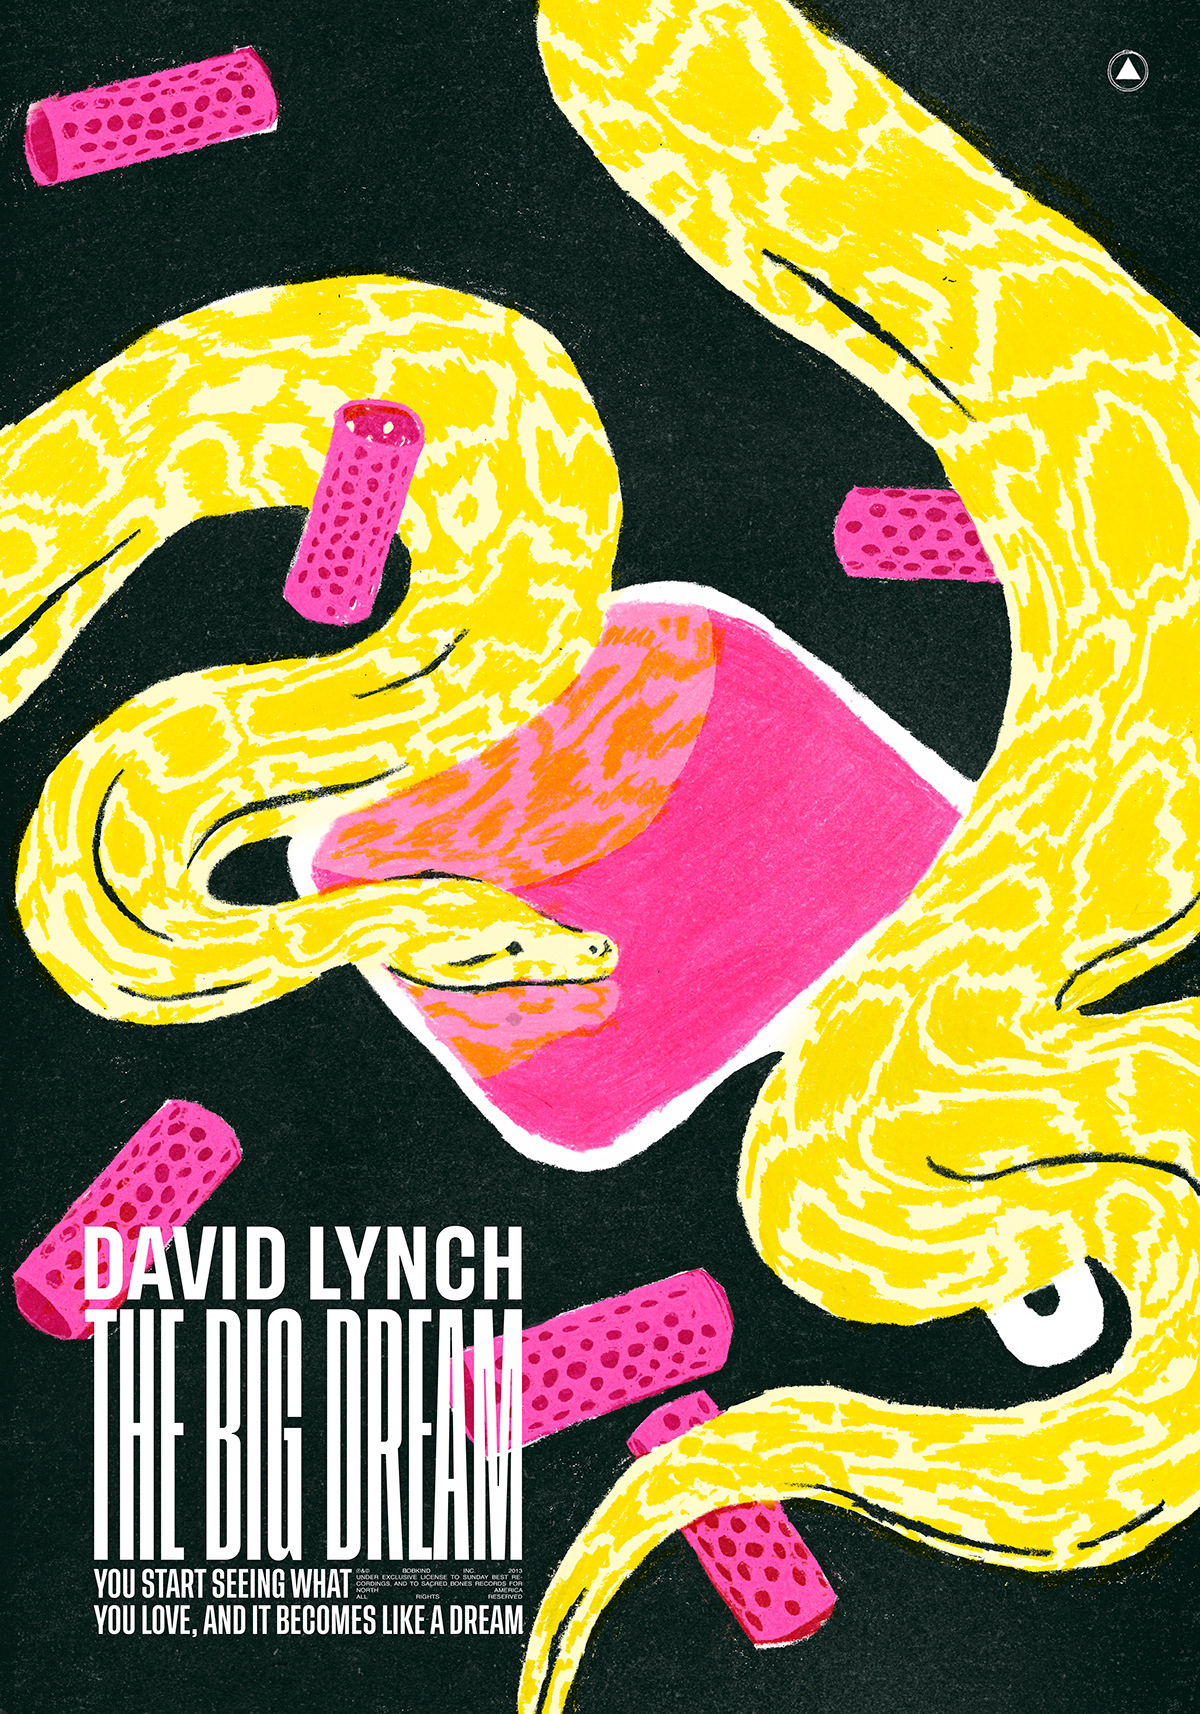 album cover cover Cover Art David Lynch music The Big Dream vinyl pink sticker